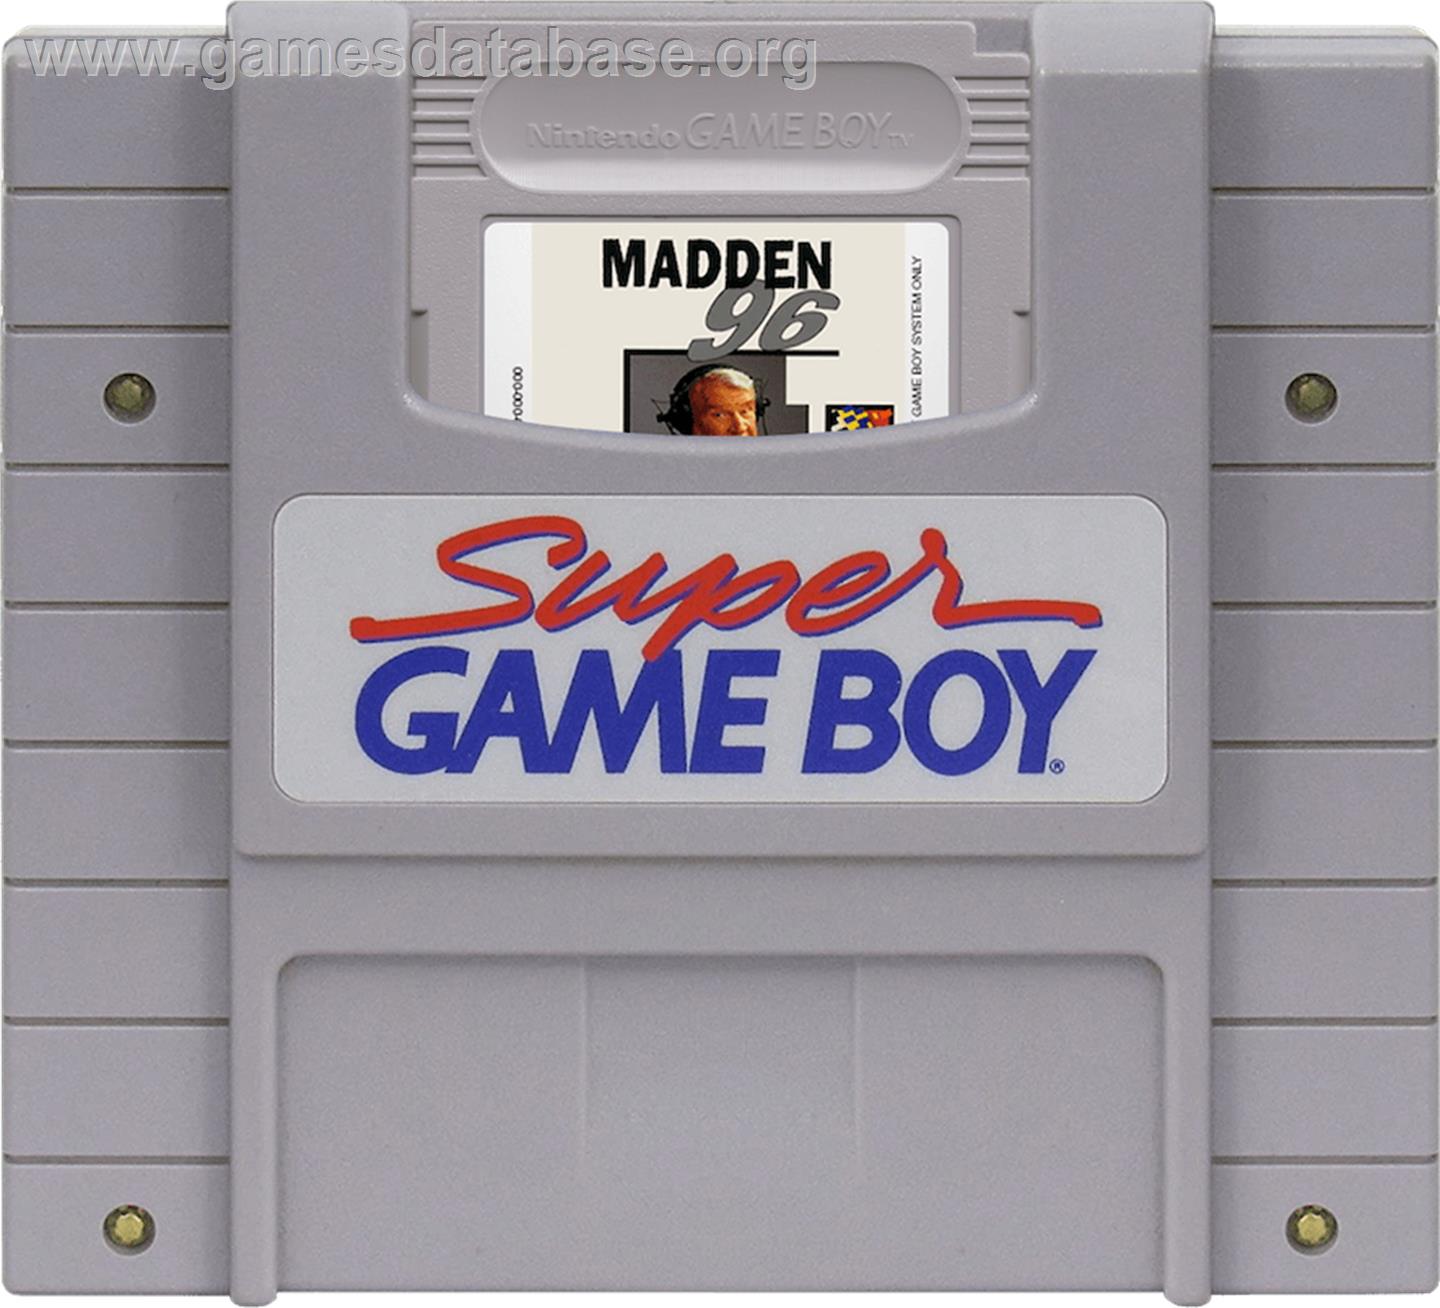 Madden '96 - Nintendo Super Gameboy - Artwork - Cartridge